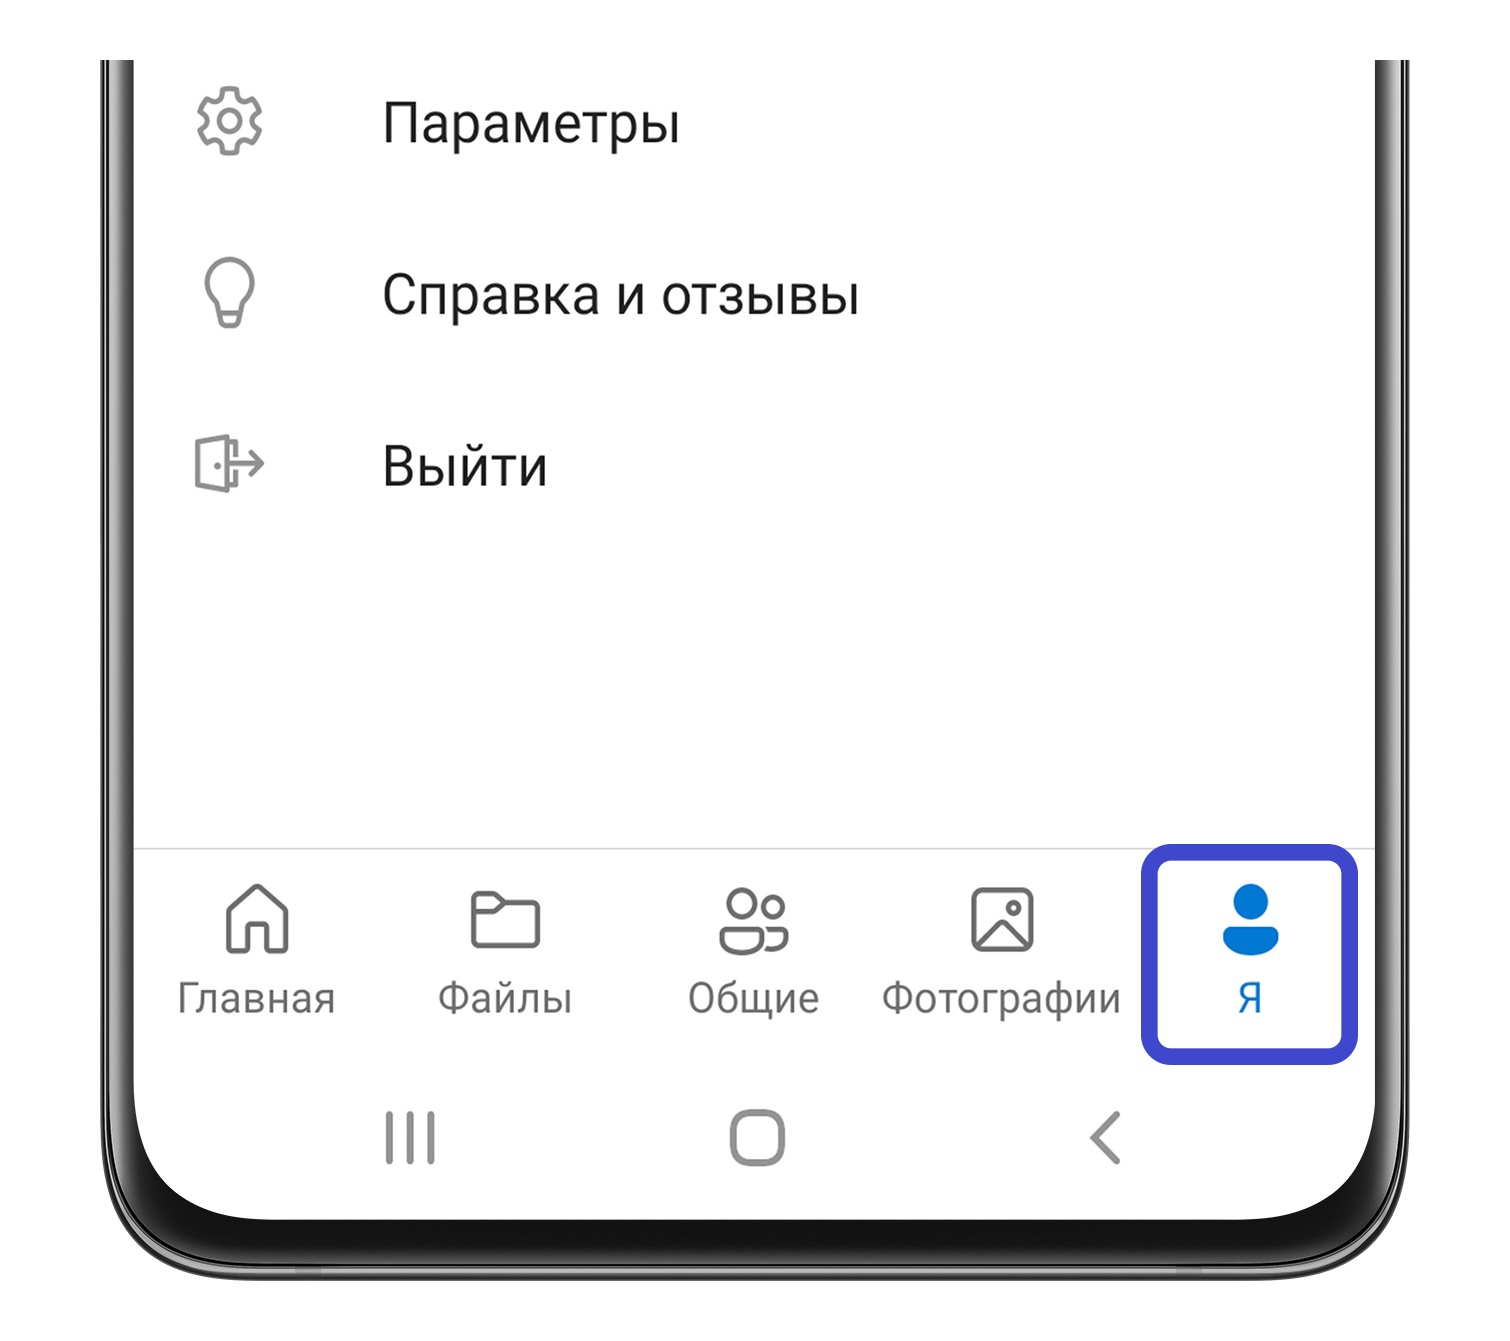 Как телеграмм перевести на русский язык на андроиде телефоне самсунг фото 92